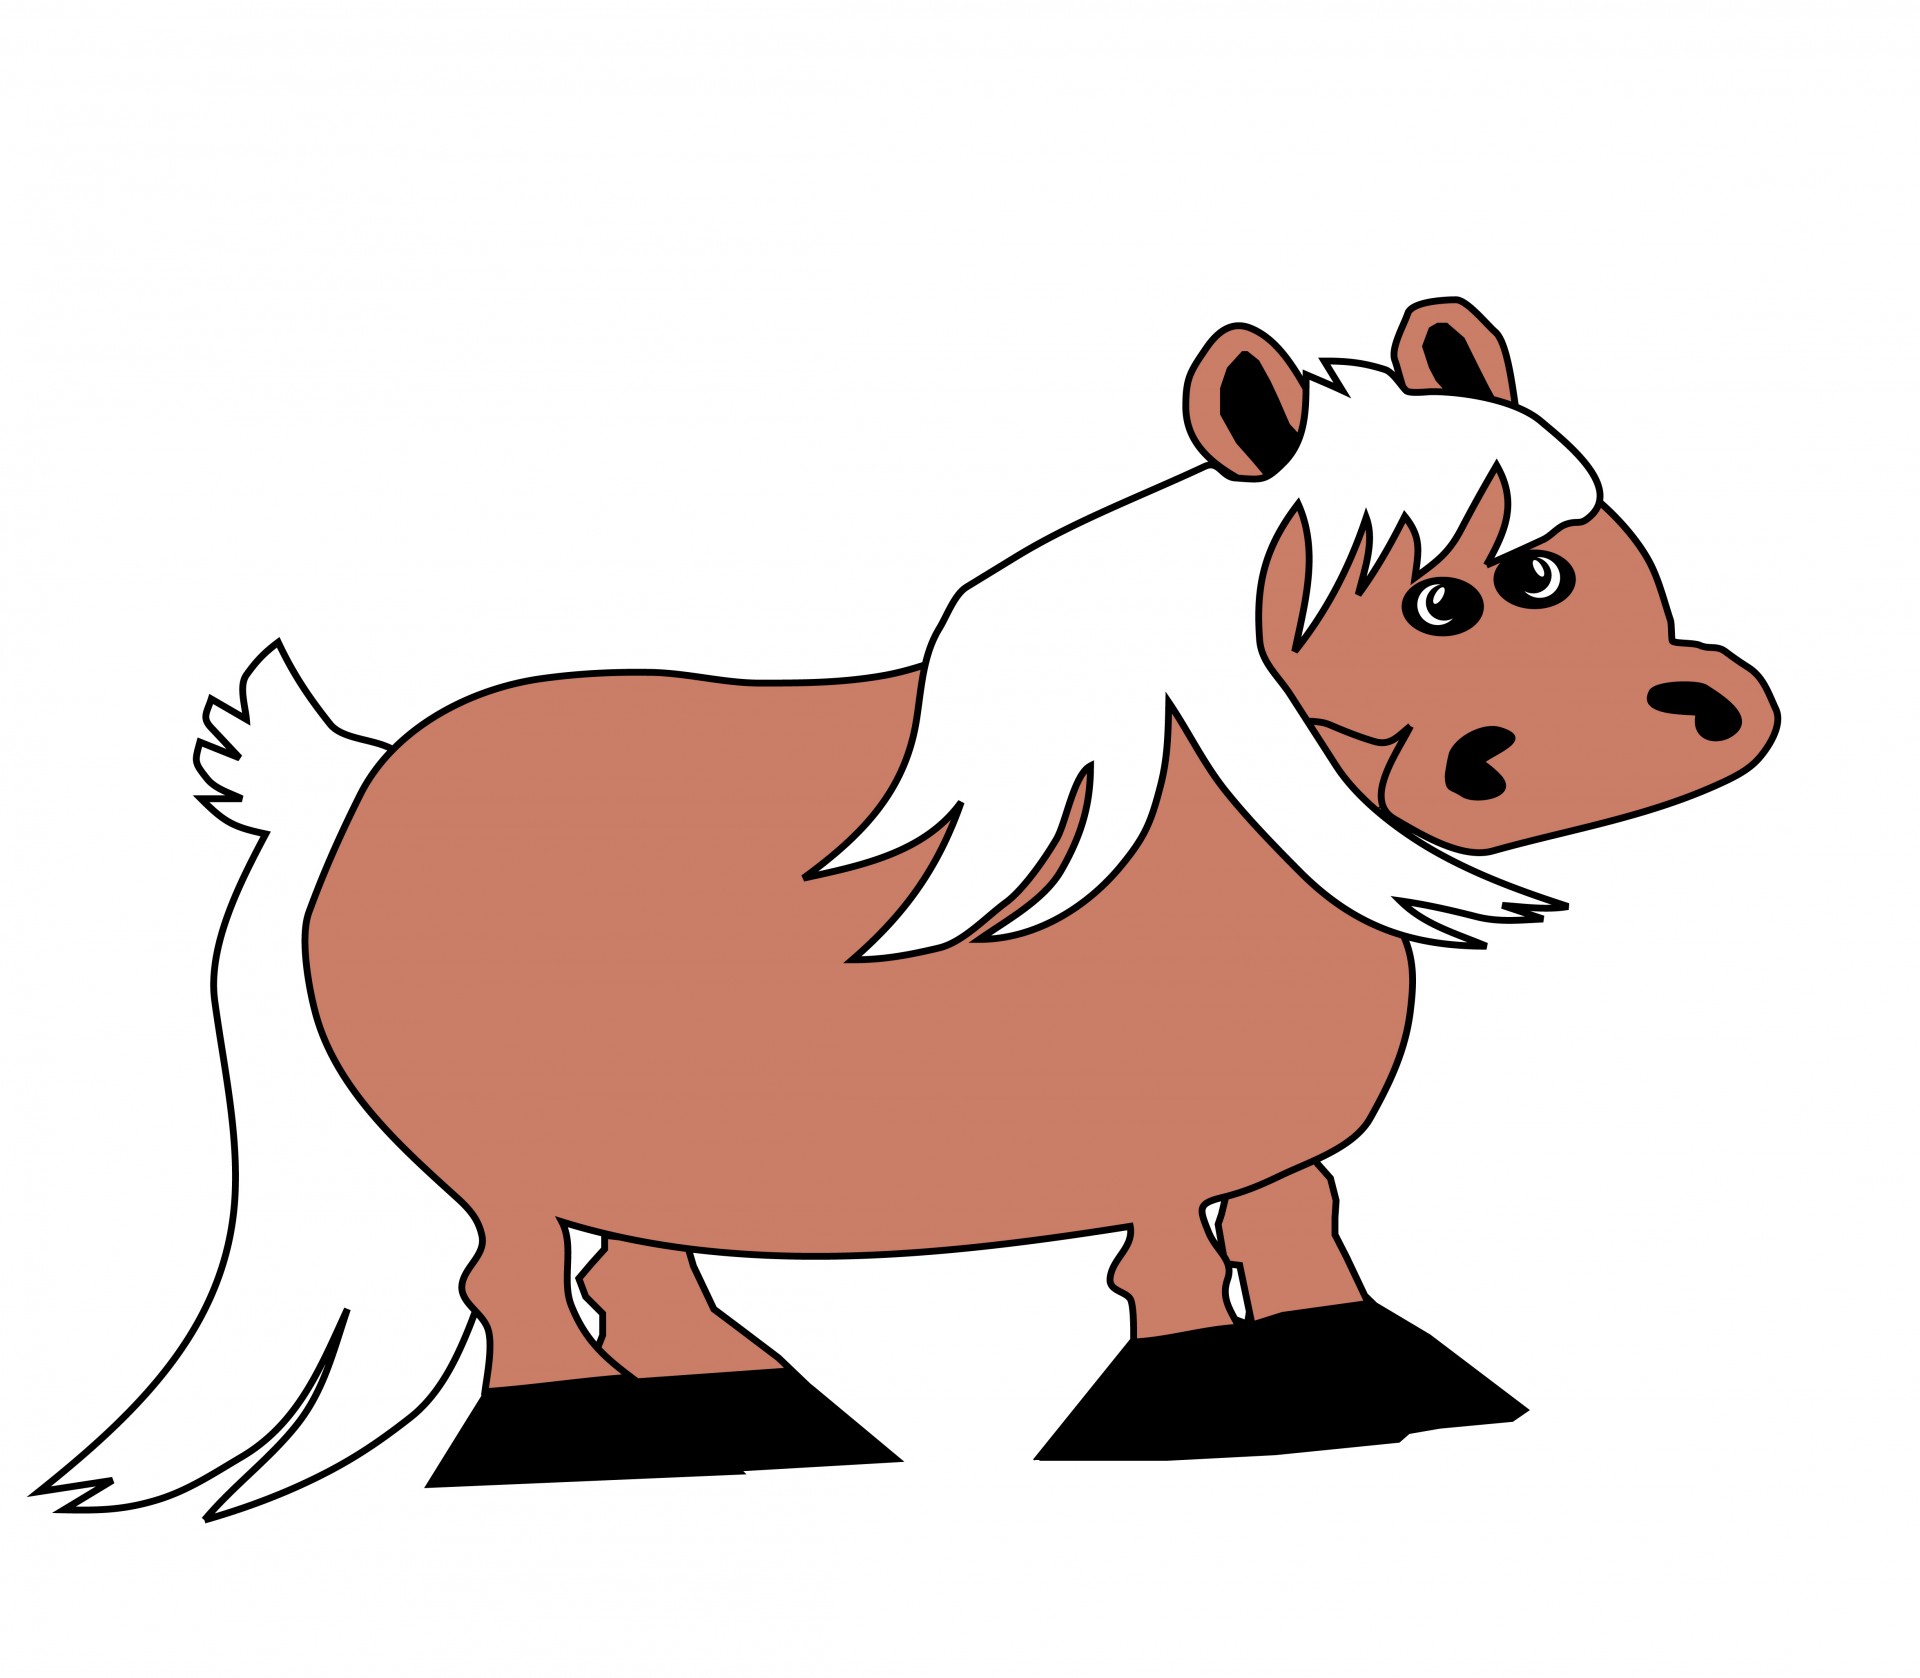 Cute farm horse cartoon clipart for scrapbooking